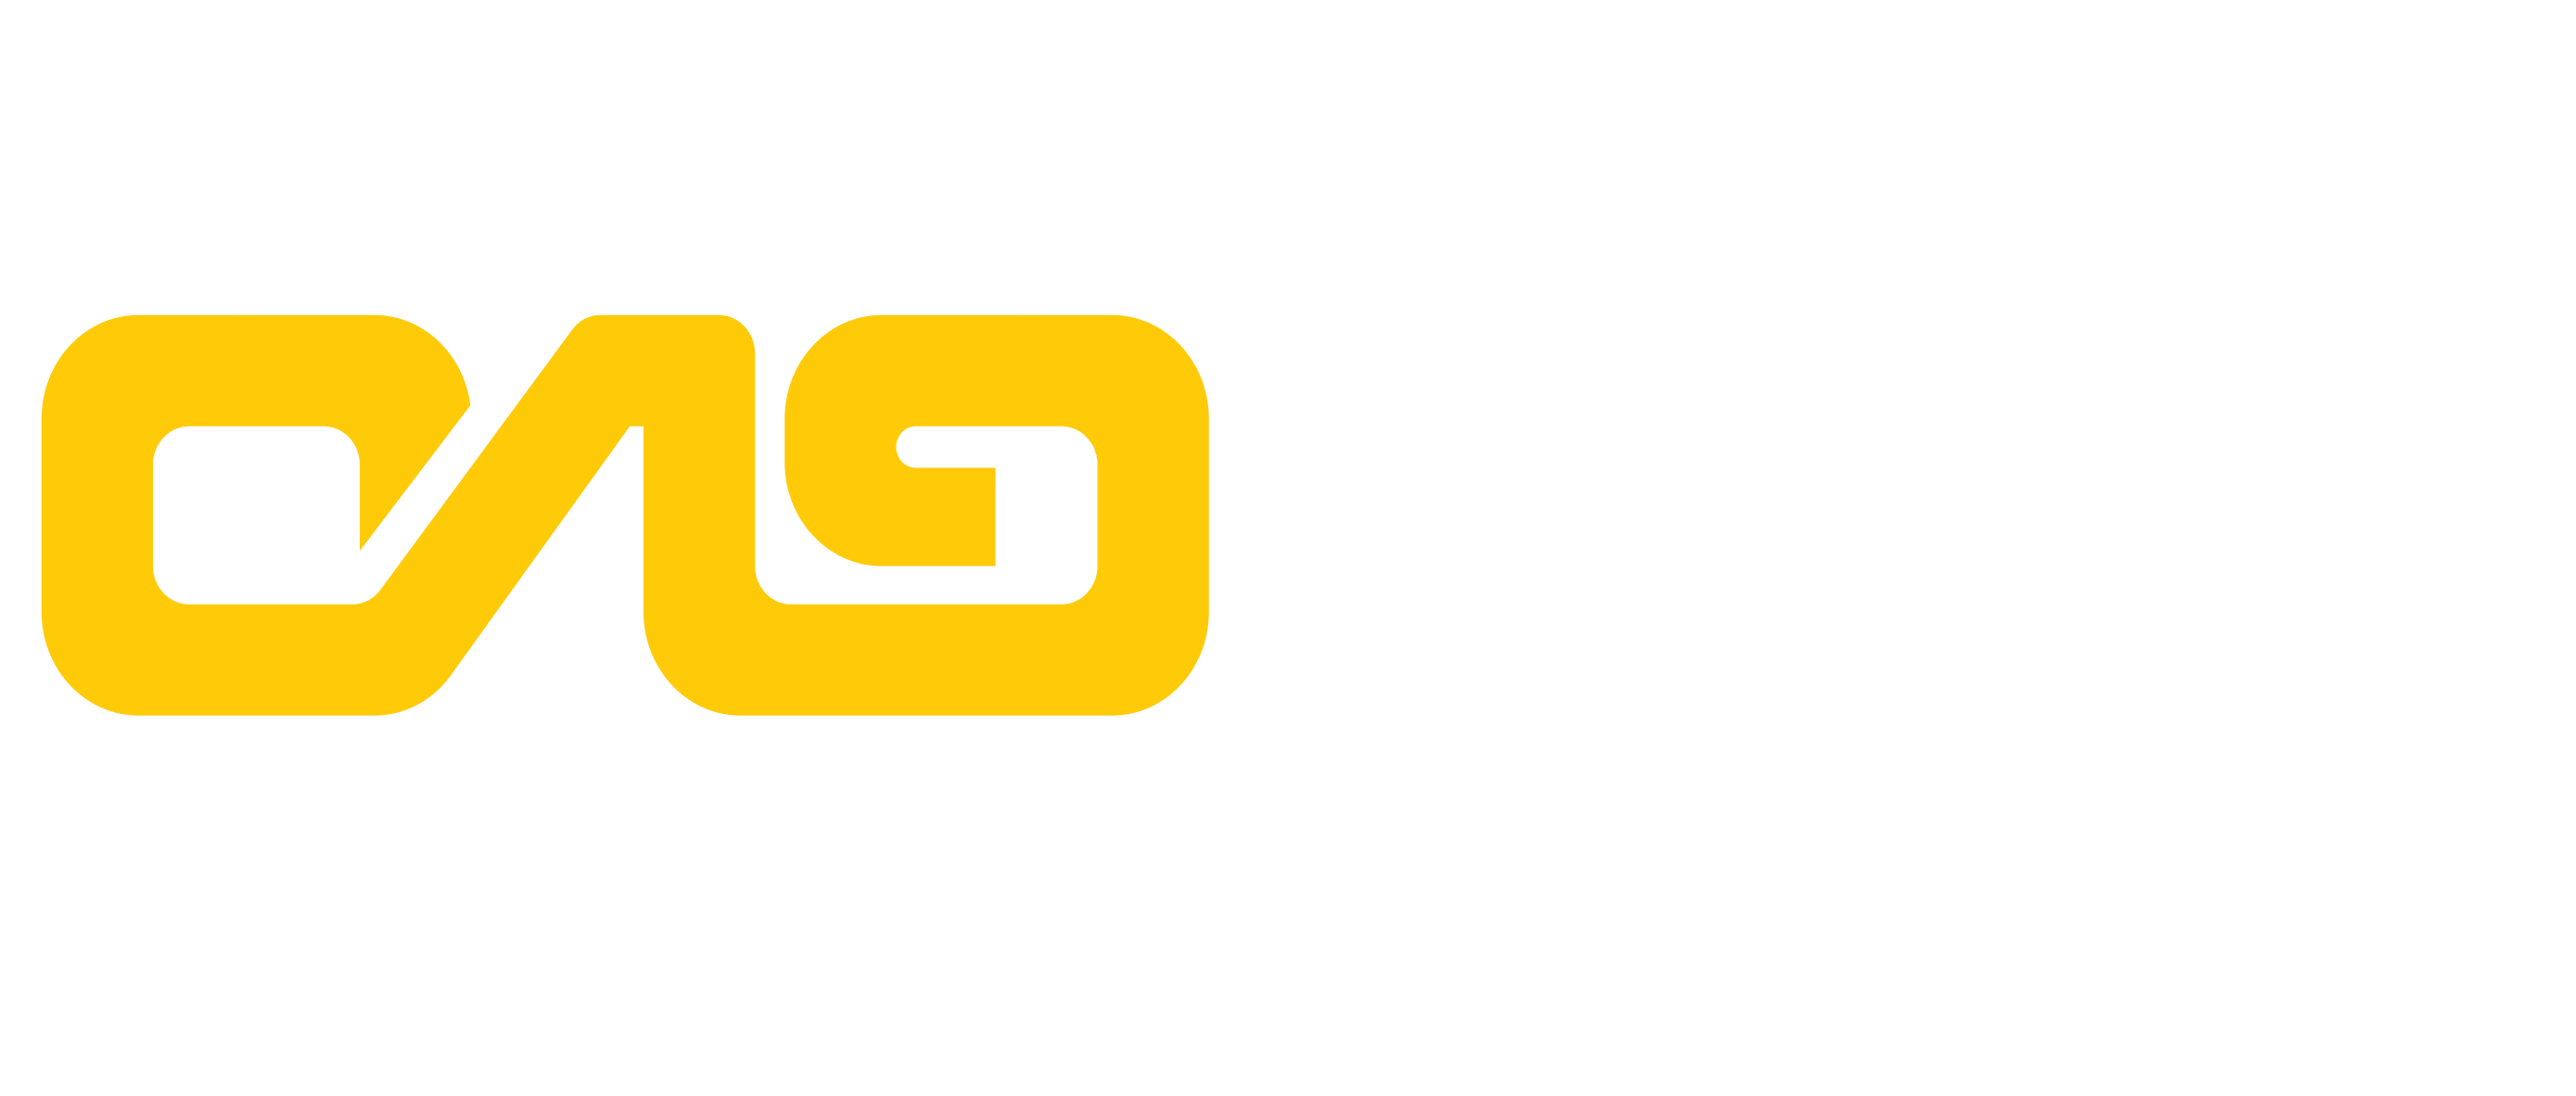 Thpa logo